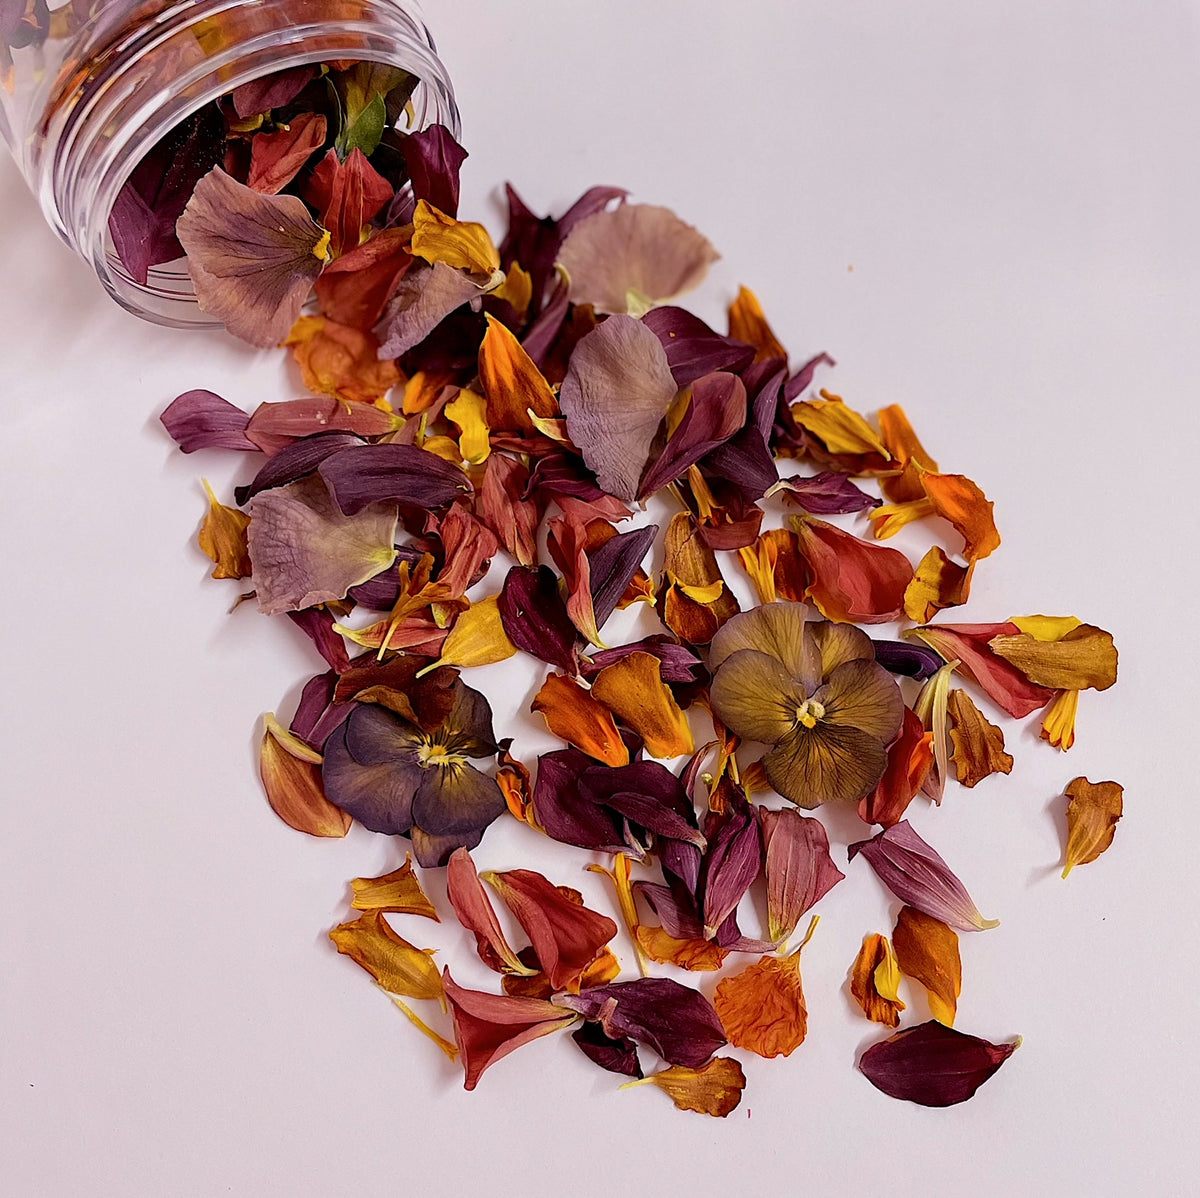 CHOCOLATE DREAM FLOWERFETTI® - Freeze Dried Edible Flower Confetti